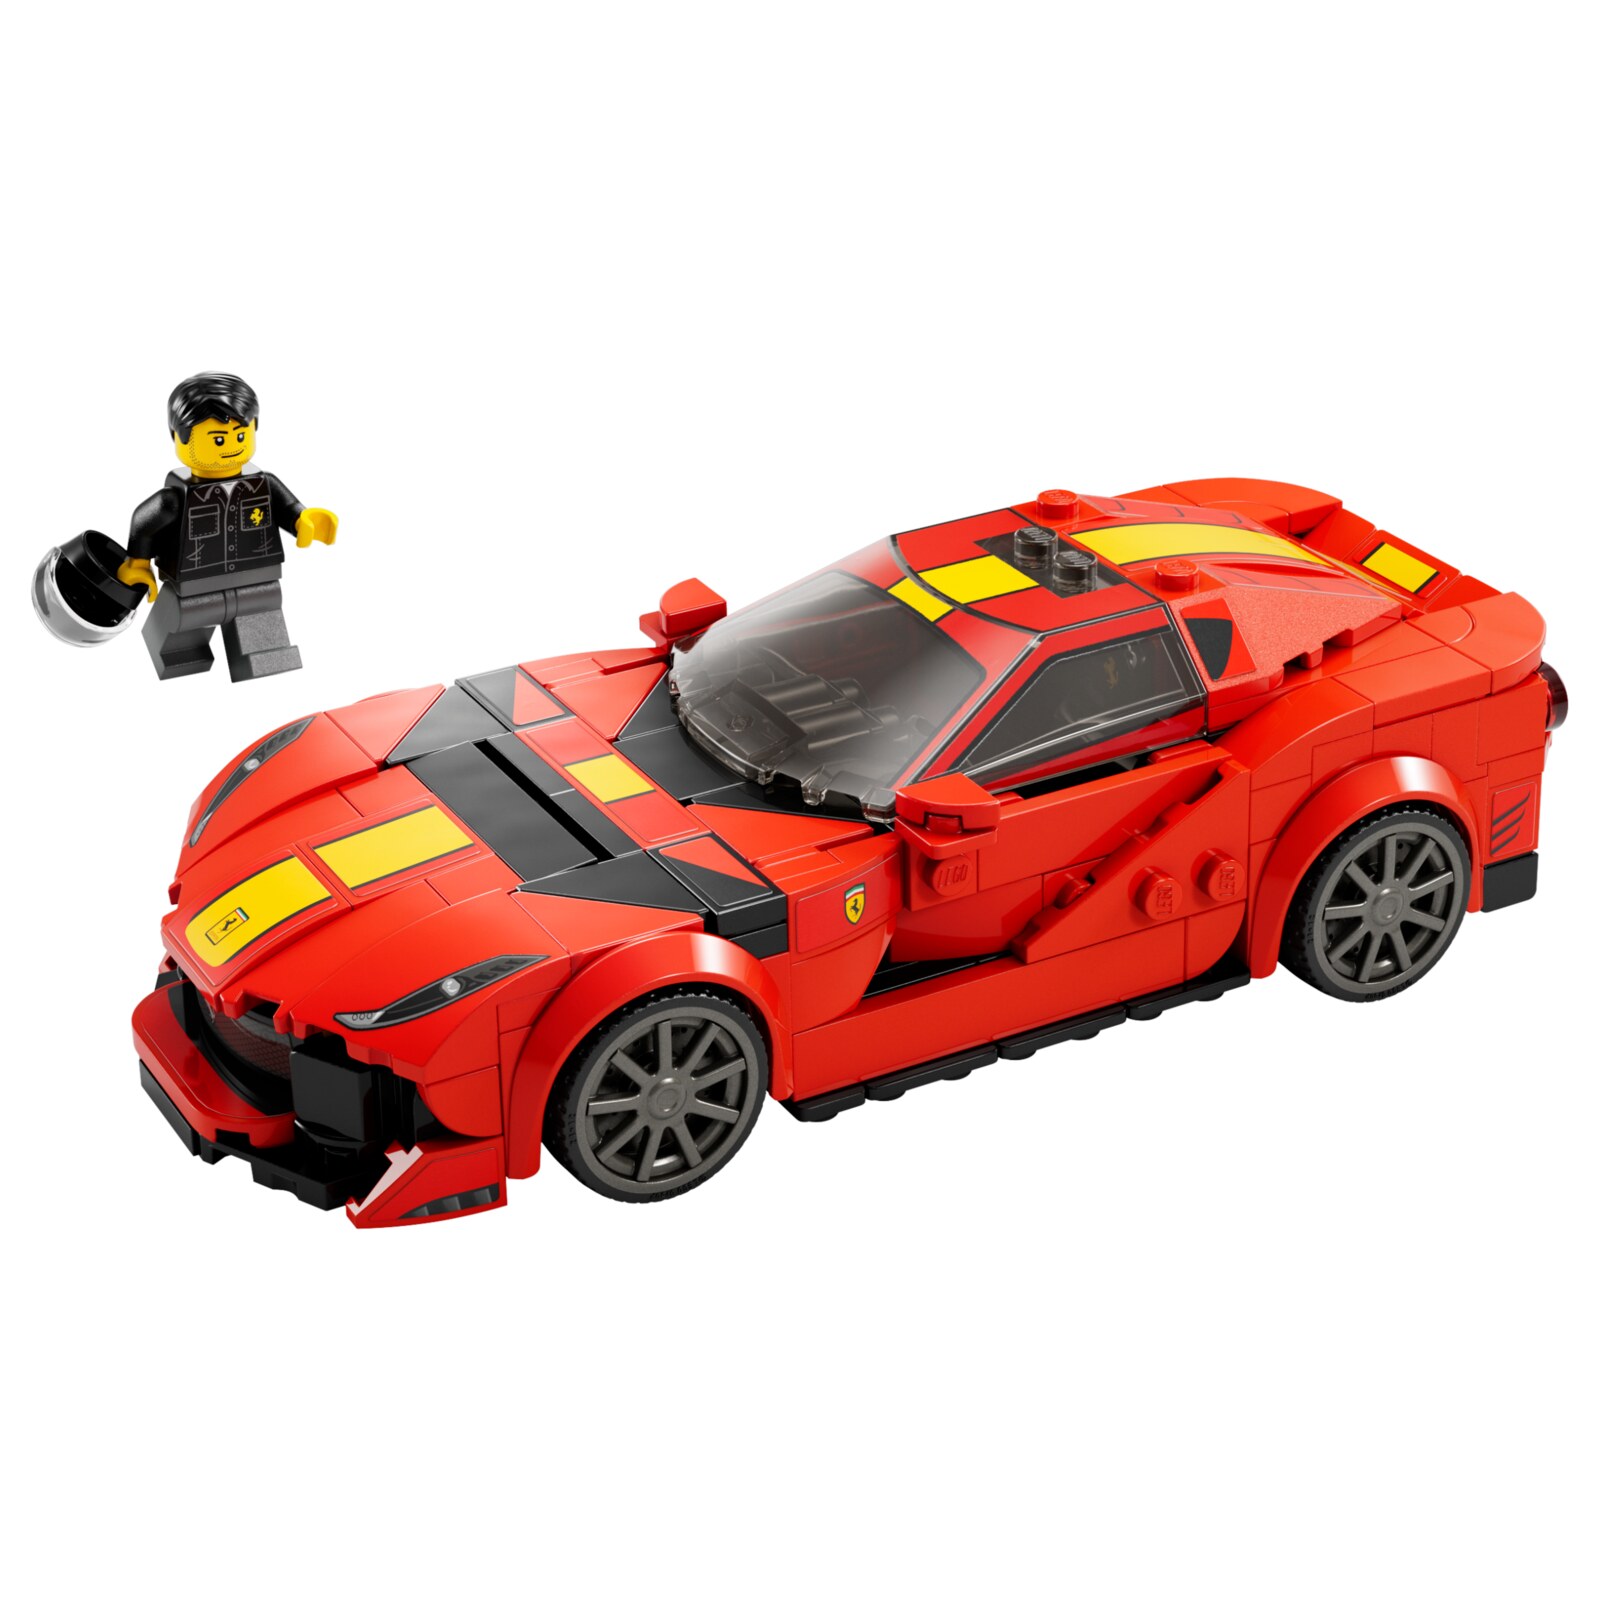 Конструктор LEGO Speed Champions Ferrari 812 Competizione, 261 деталь, 76914 конструктор lego polybag speed champions 30657 mclaren solus gt 95 дет